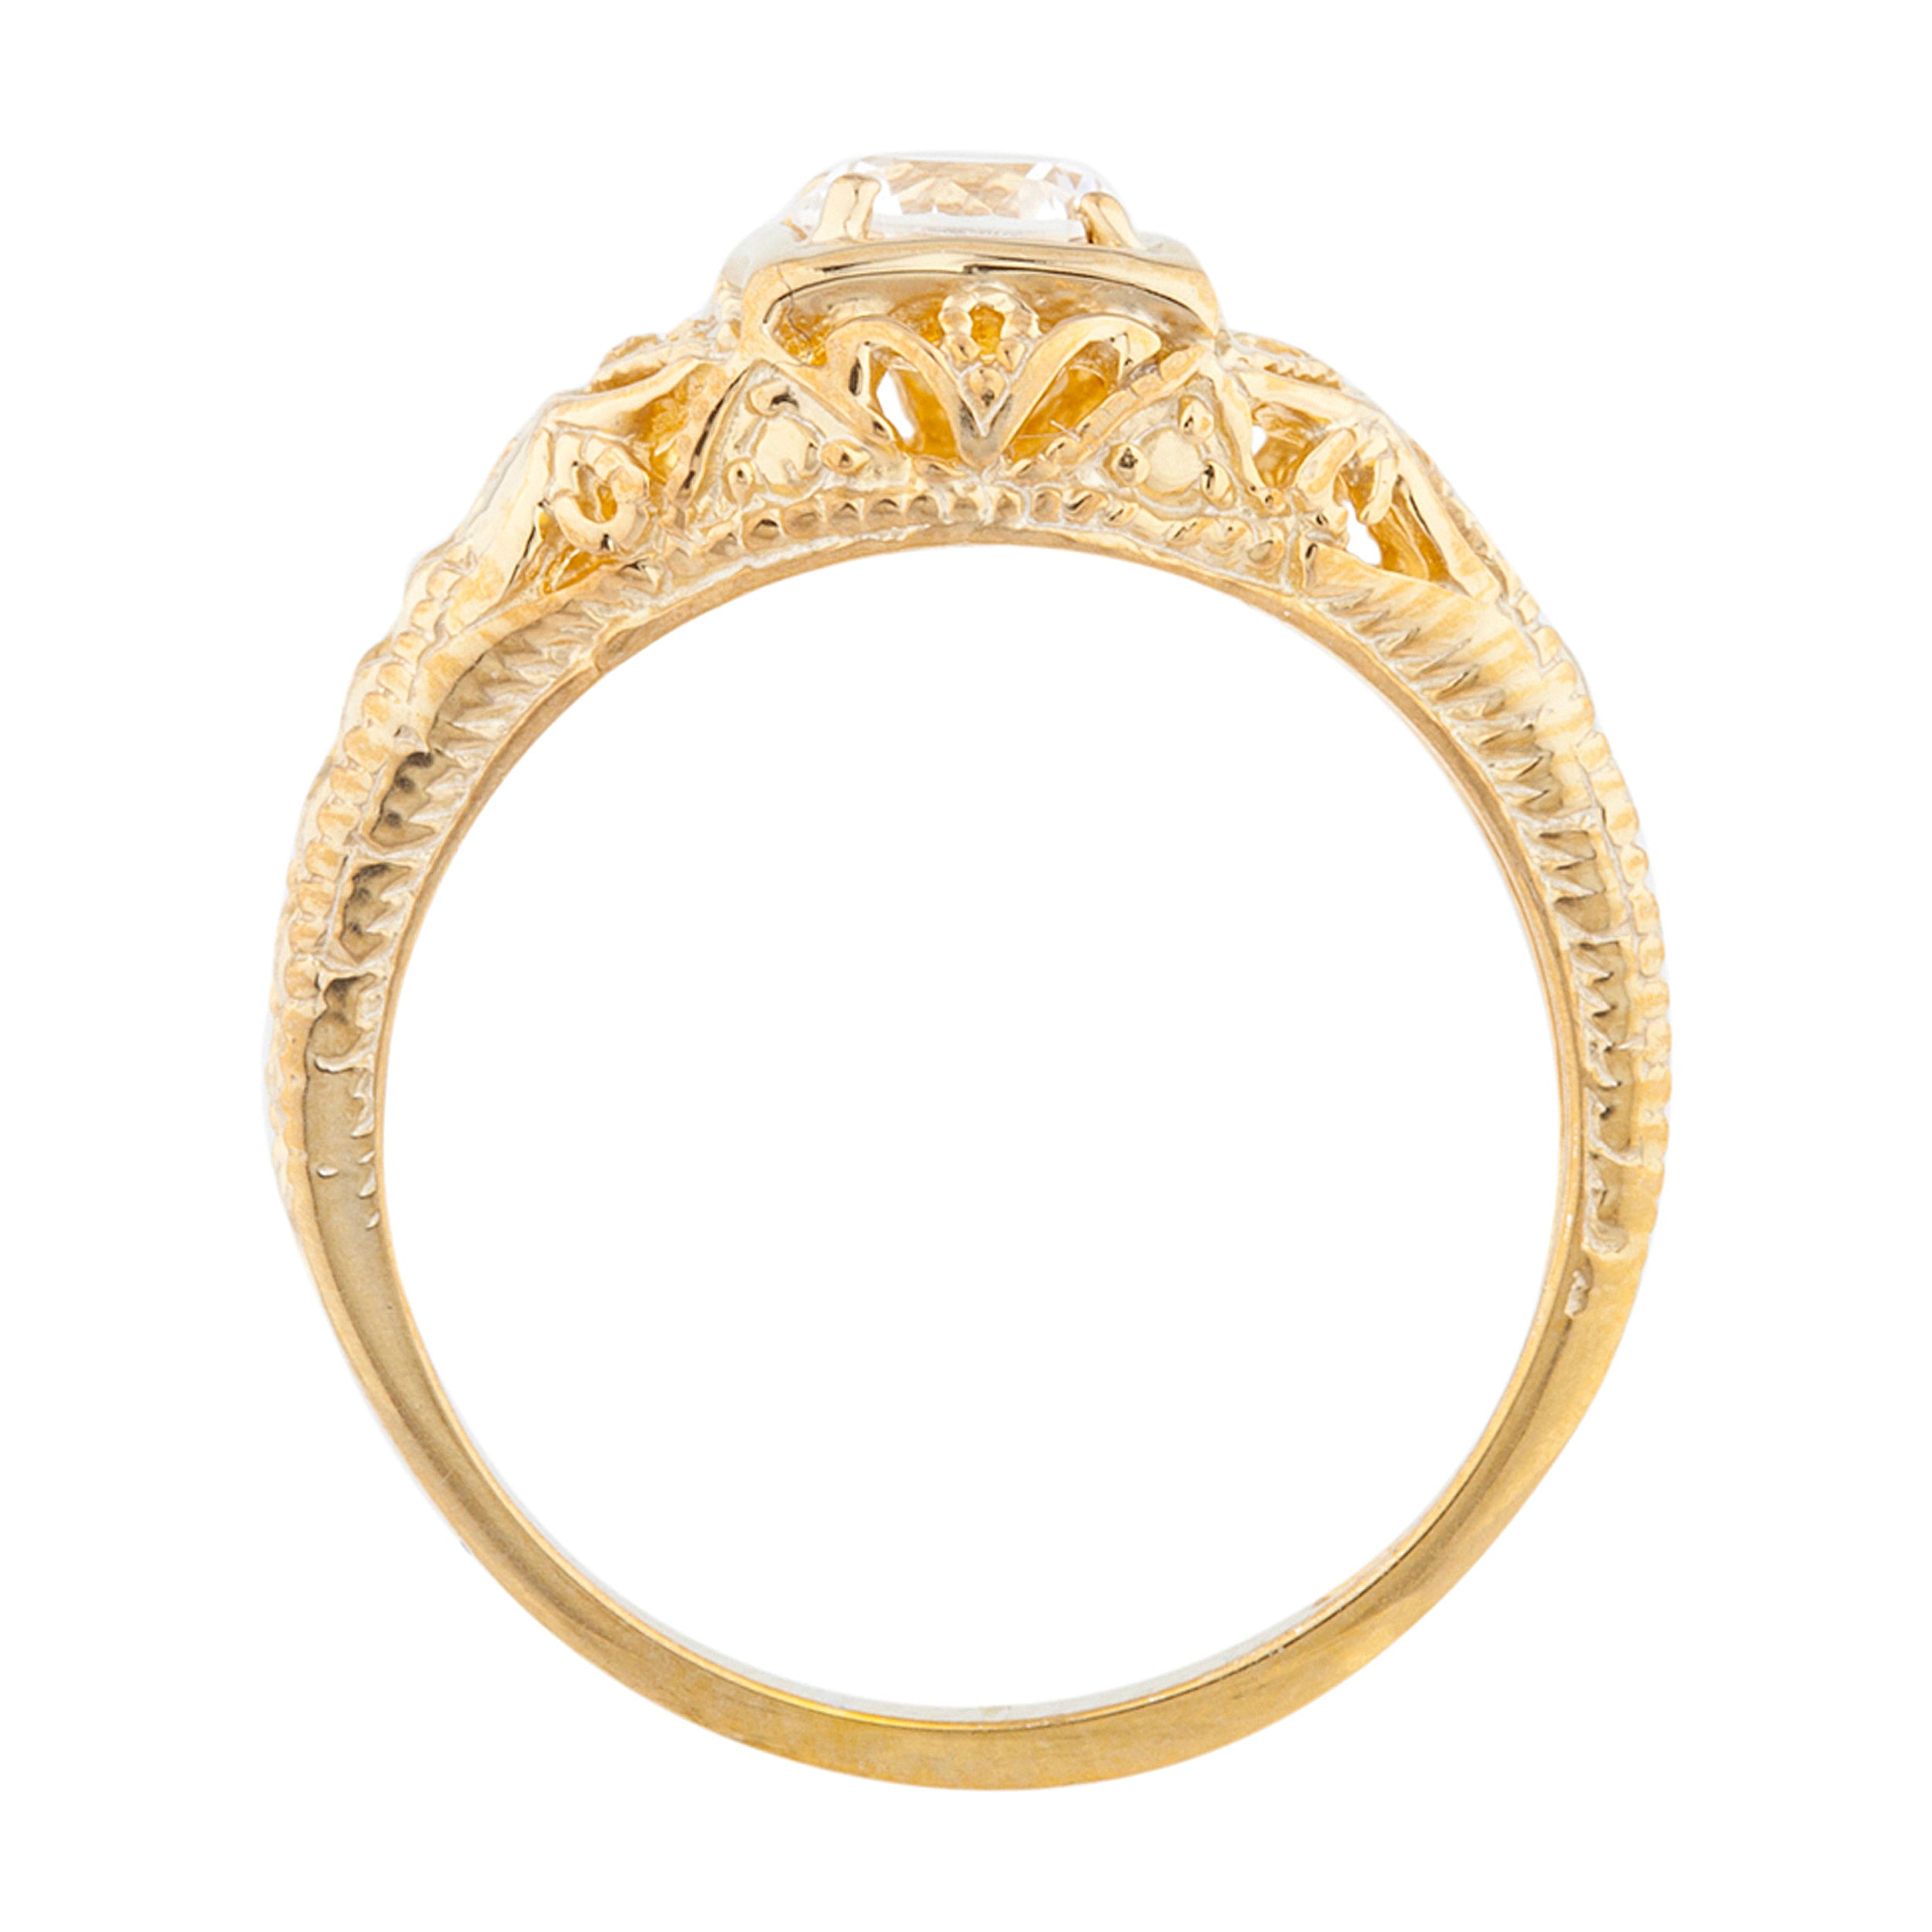 14Kt Gold Orange Citrine & Diamond Design Round Ring